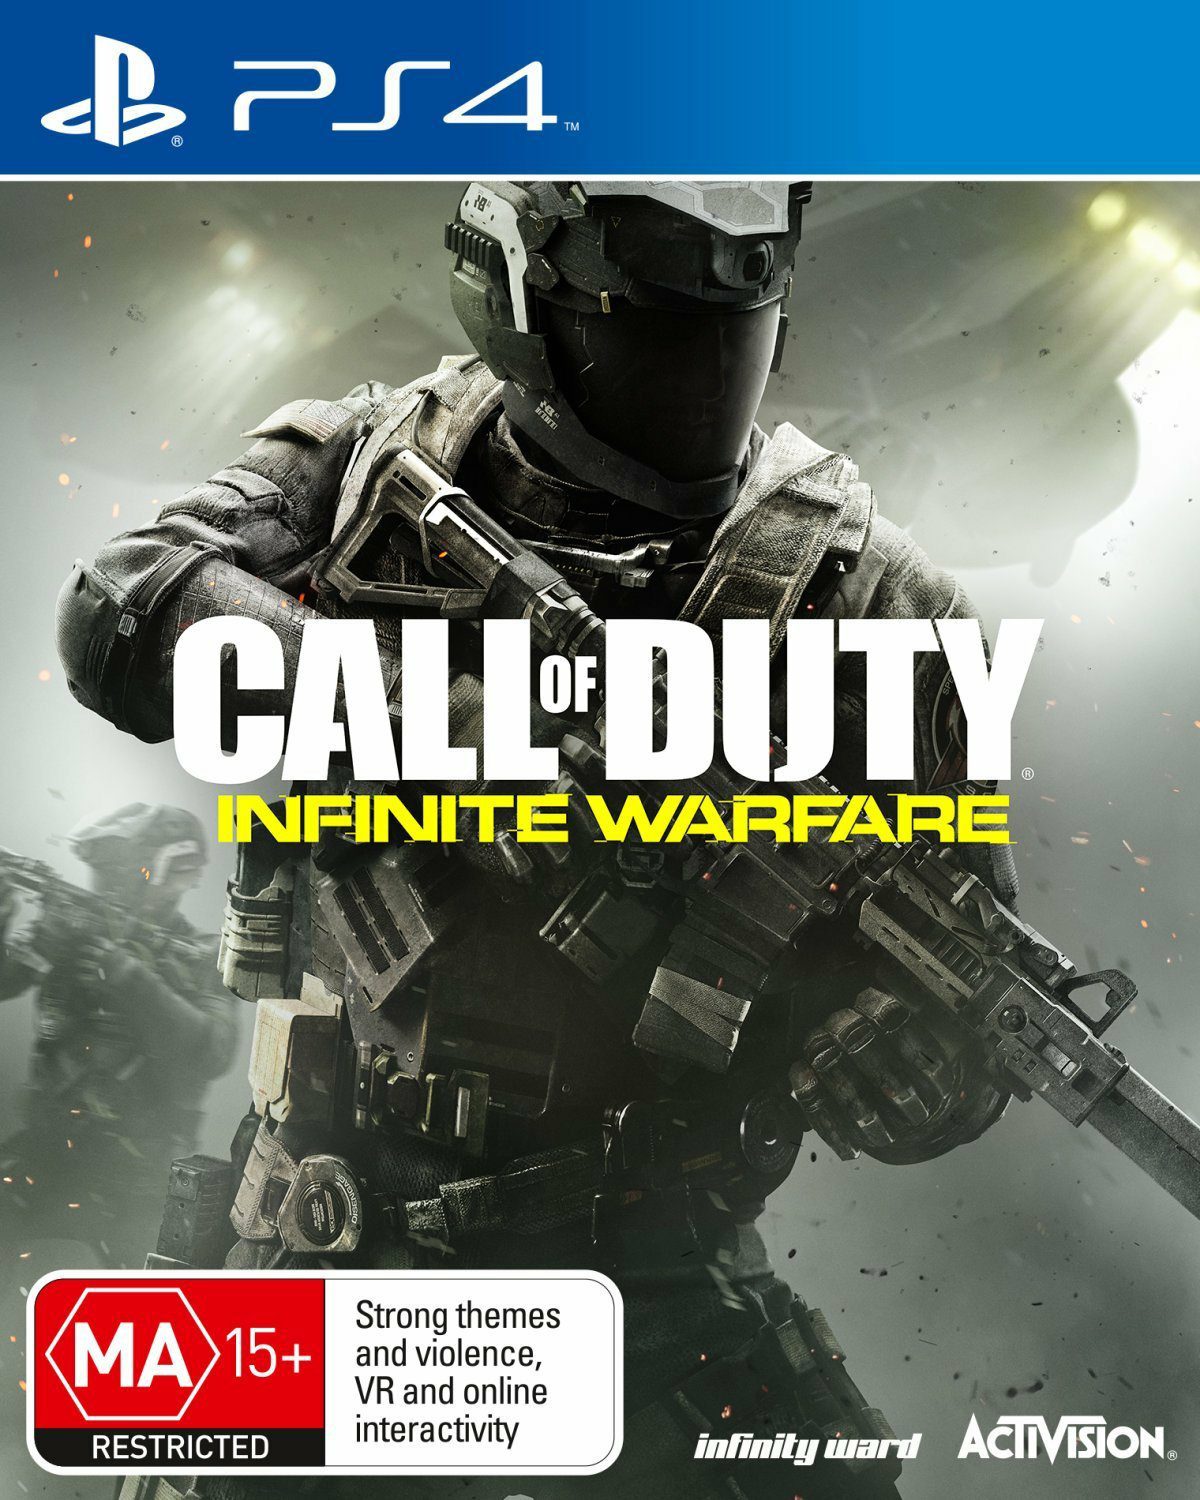 Call of Duty: Infinite Warfare PS4